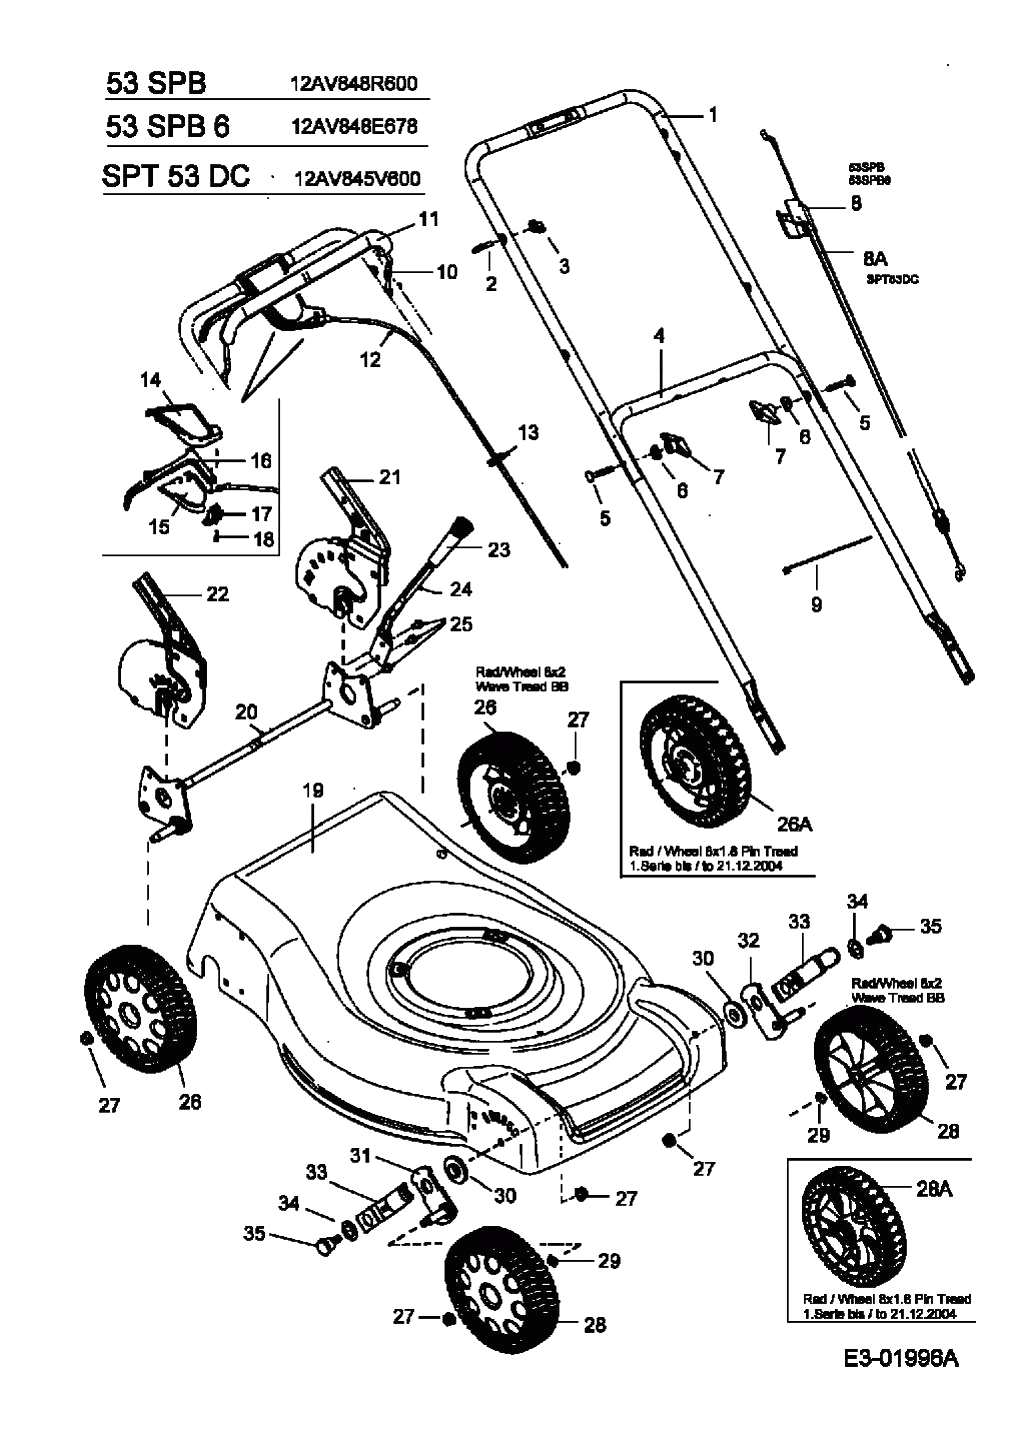 MTD Артикул 12AV848E678 (год выпуска 2005). Ручка, колеса, регулятор высоты реза